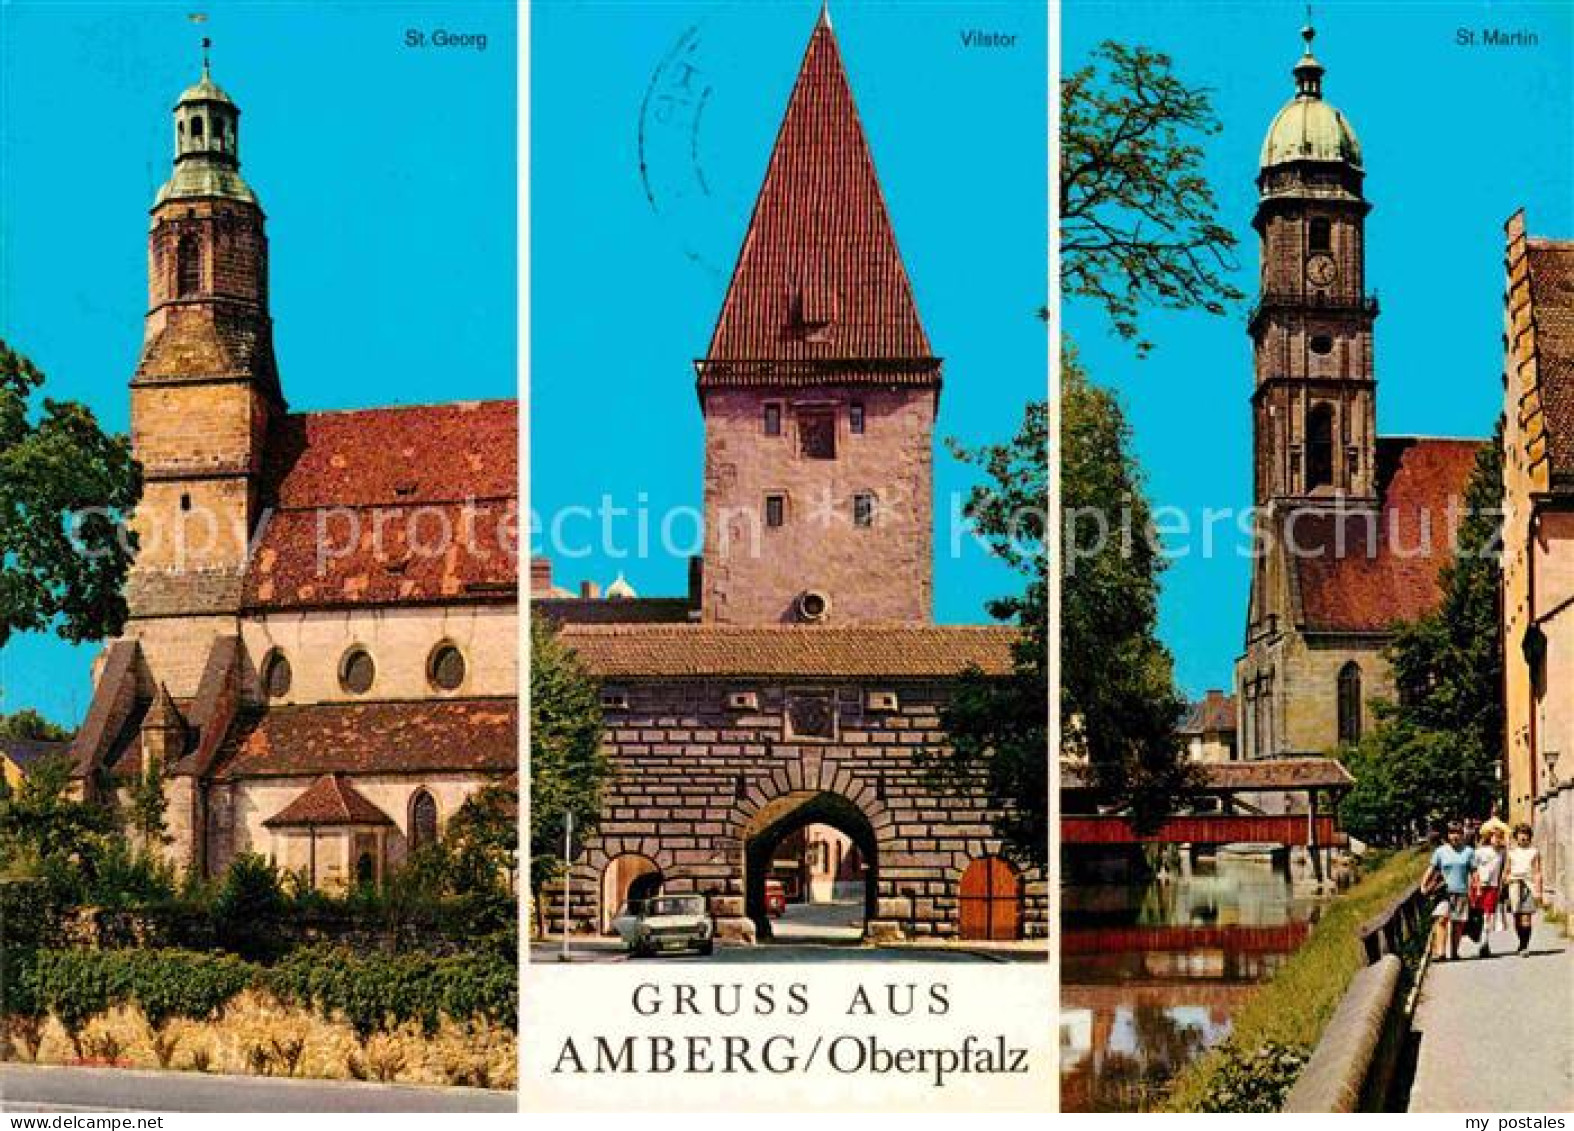 72707279 Amberg Oberpfalz St Georg Vilstor St Martin Amberg - Amberg